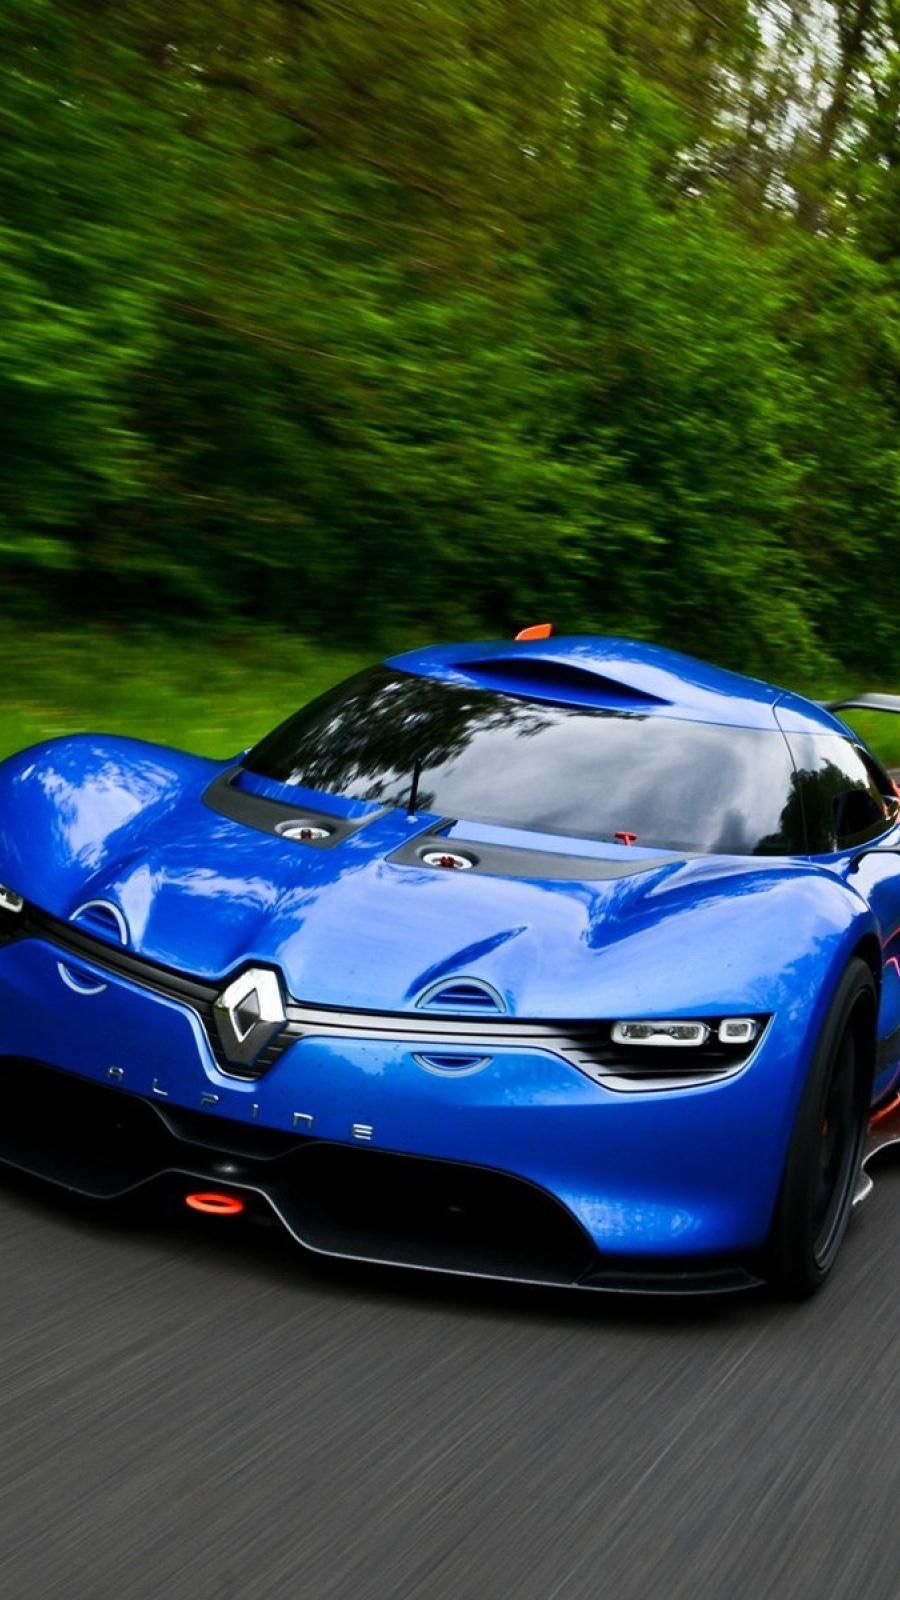 Renault Concept Car Mobile Wallpaper